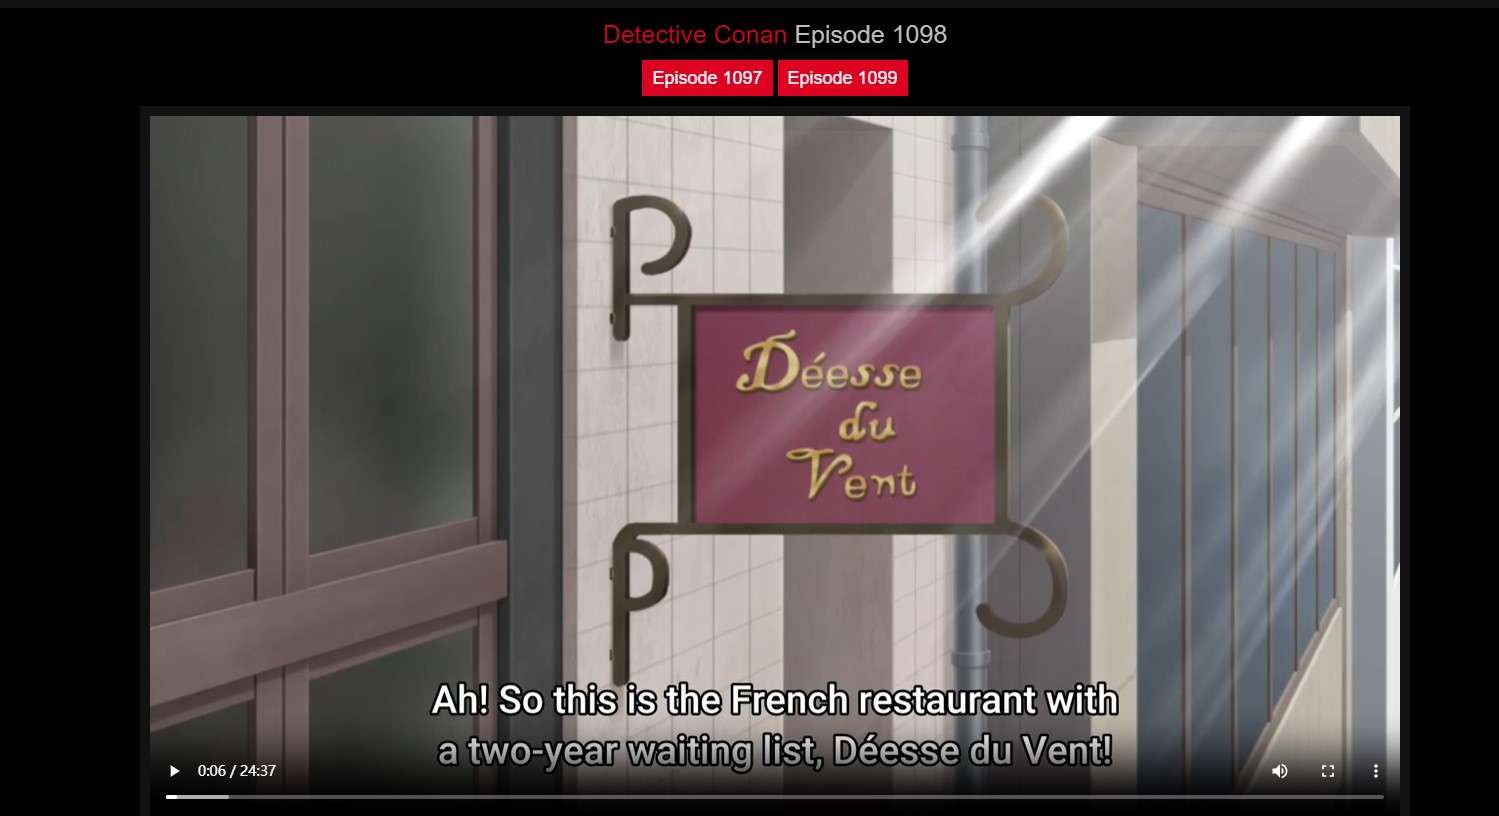 animeheaven.vip at WI. AnimeHeaven - Watch animes online free in HD on  AnimeHeaven